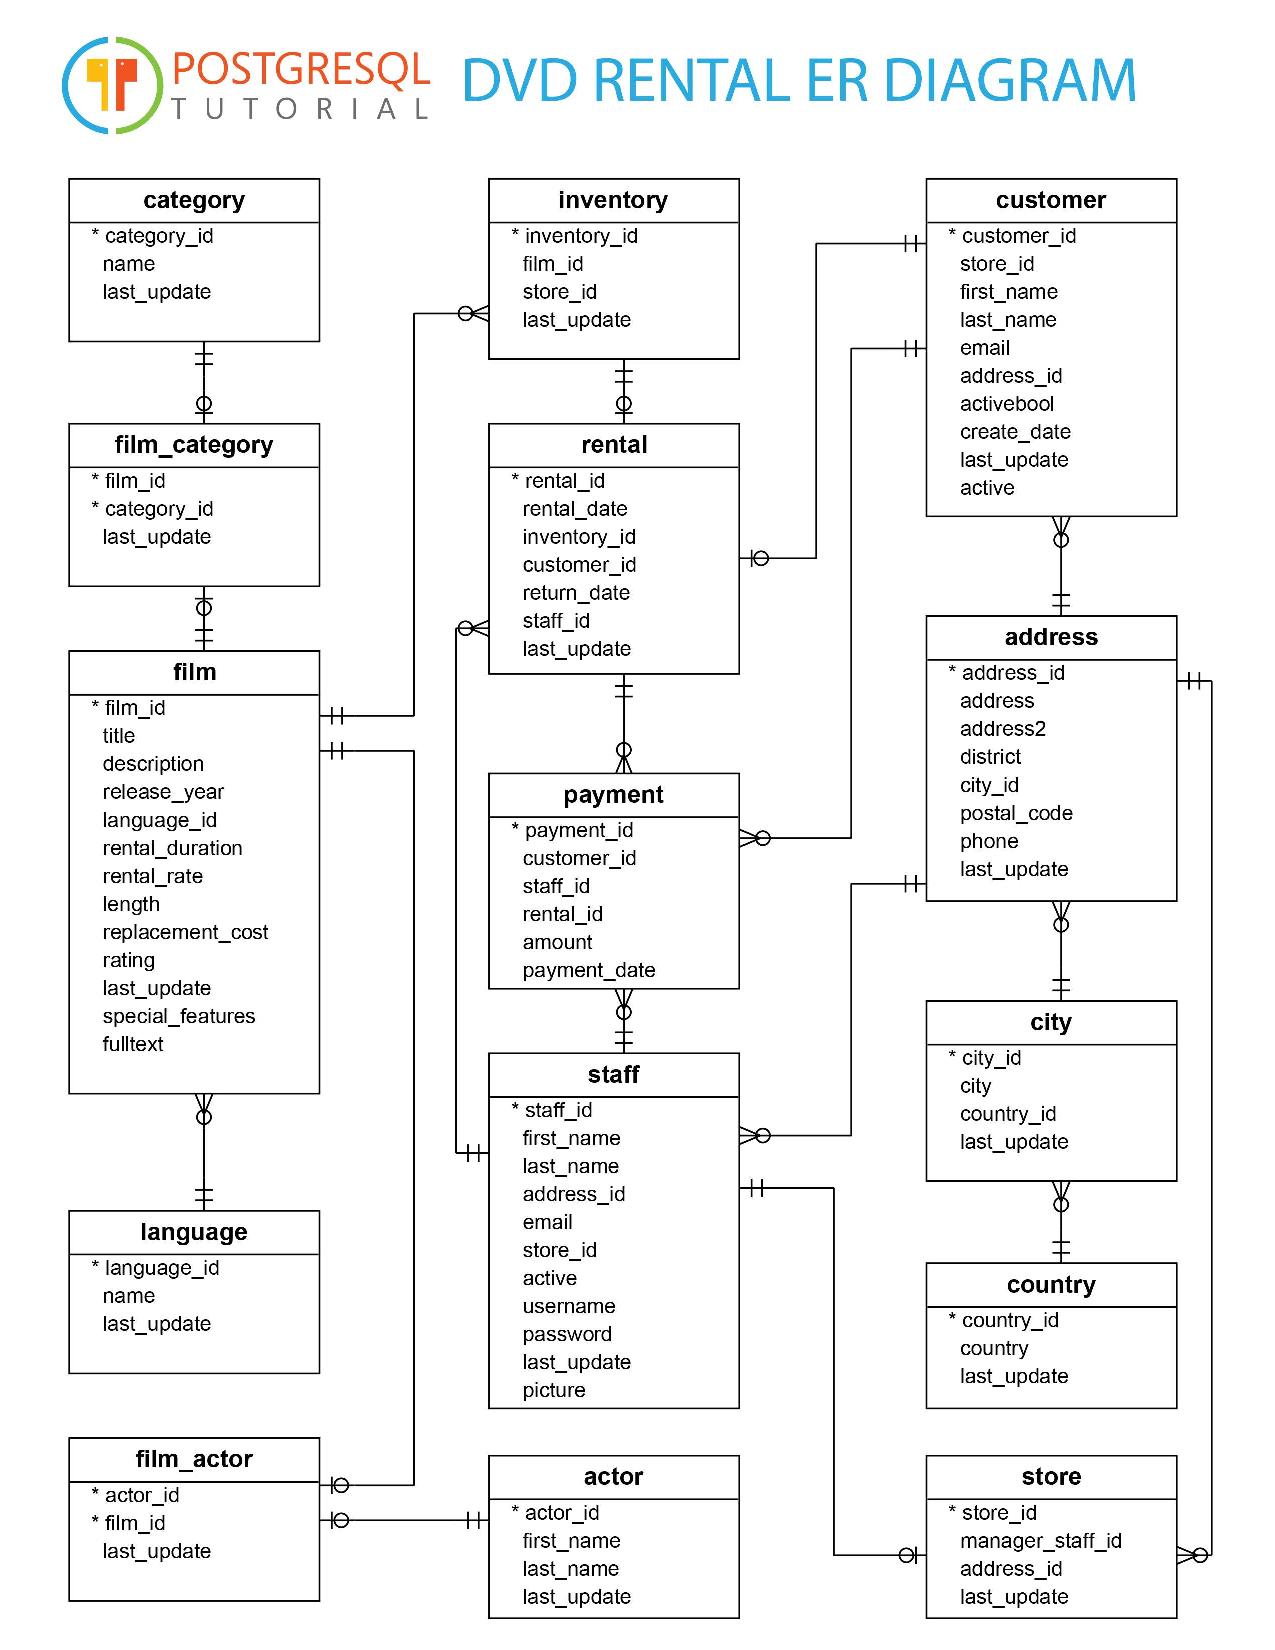 PostgreSQL dababase schema for technical interview questions